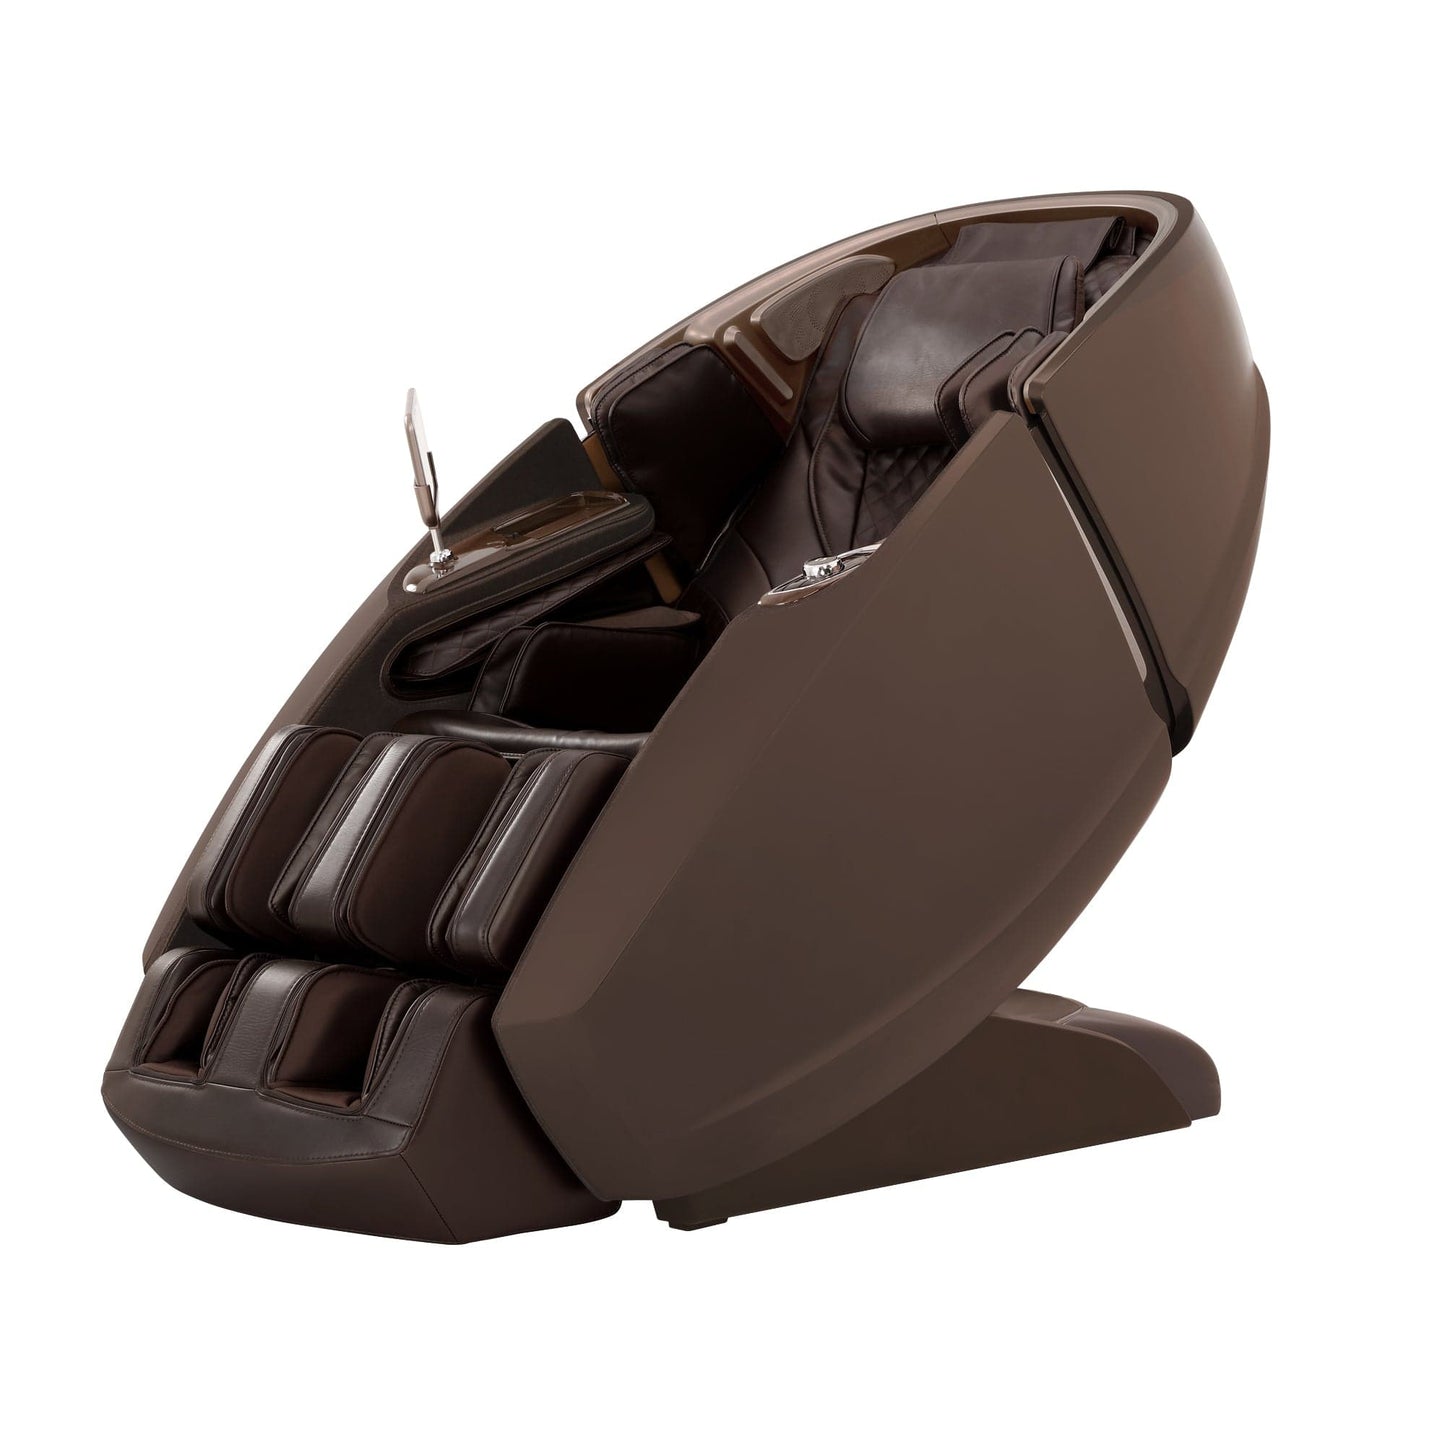 Daiwa Massage Chairs Daiwa Supreme Hybrid